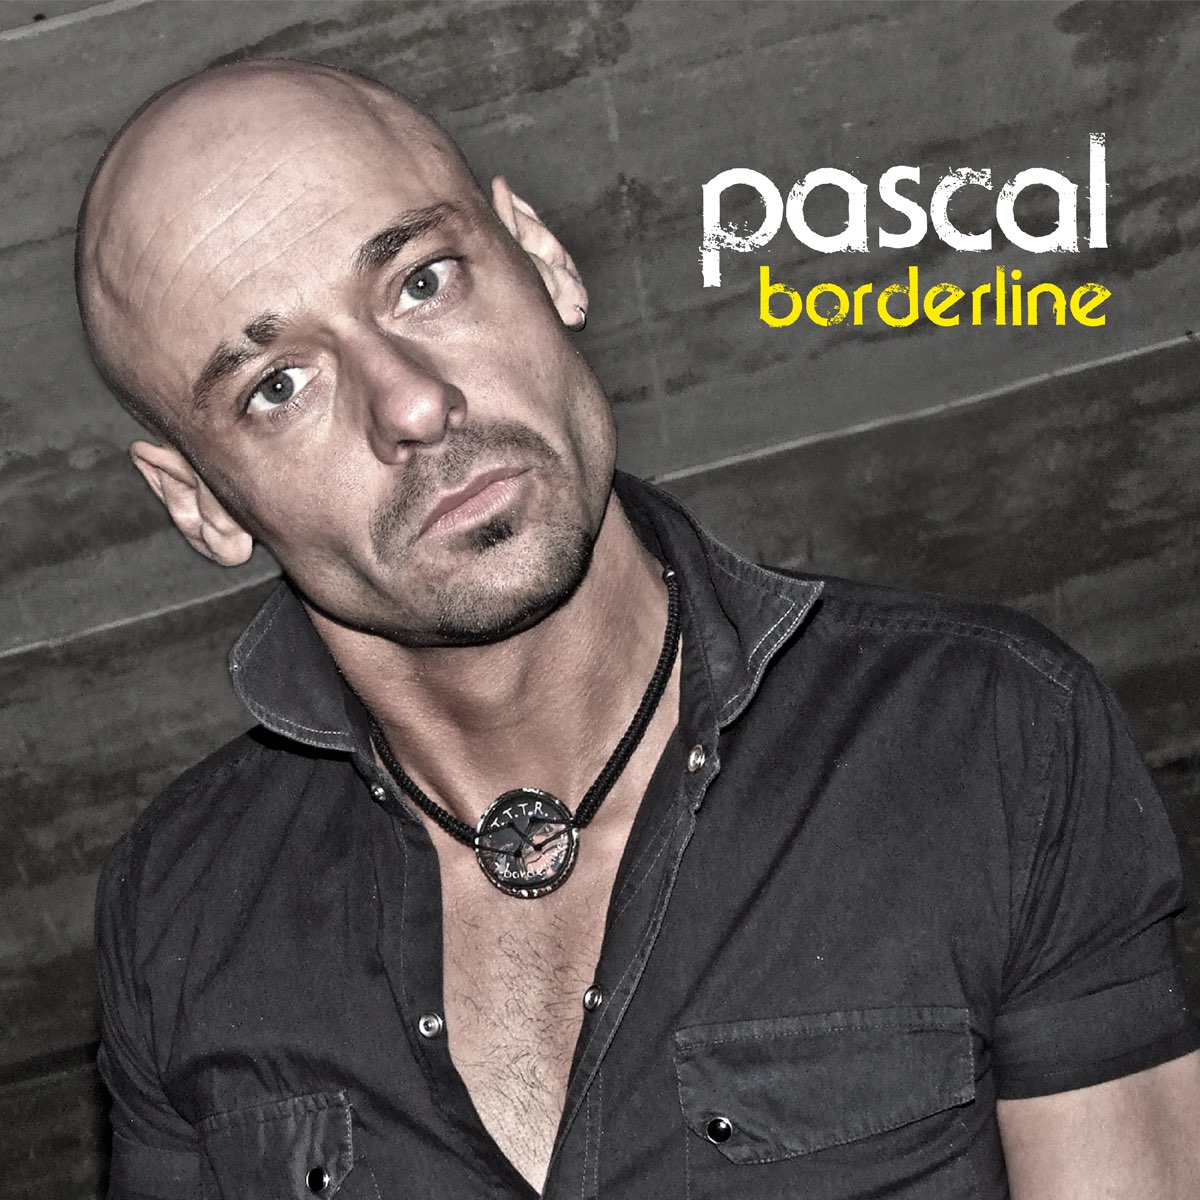 Pascal музыка. Паскаль певец фото. Pascal Music. Паскаль певец популярные треки.